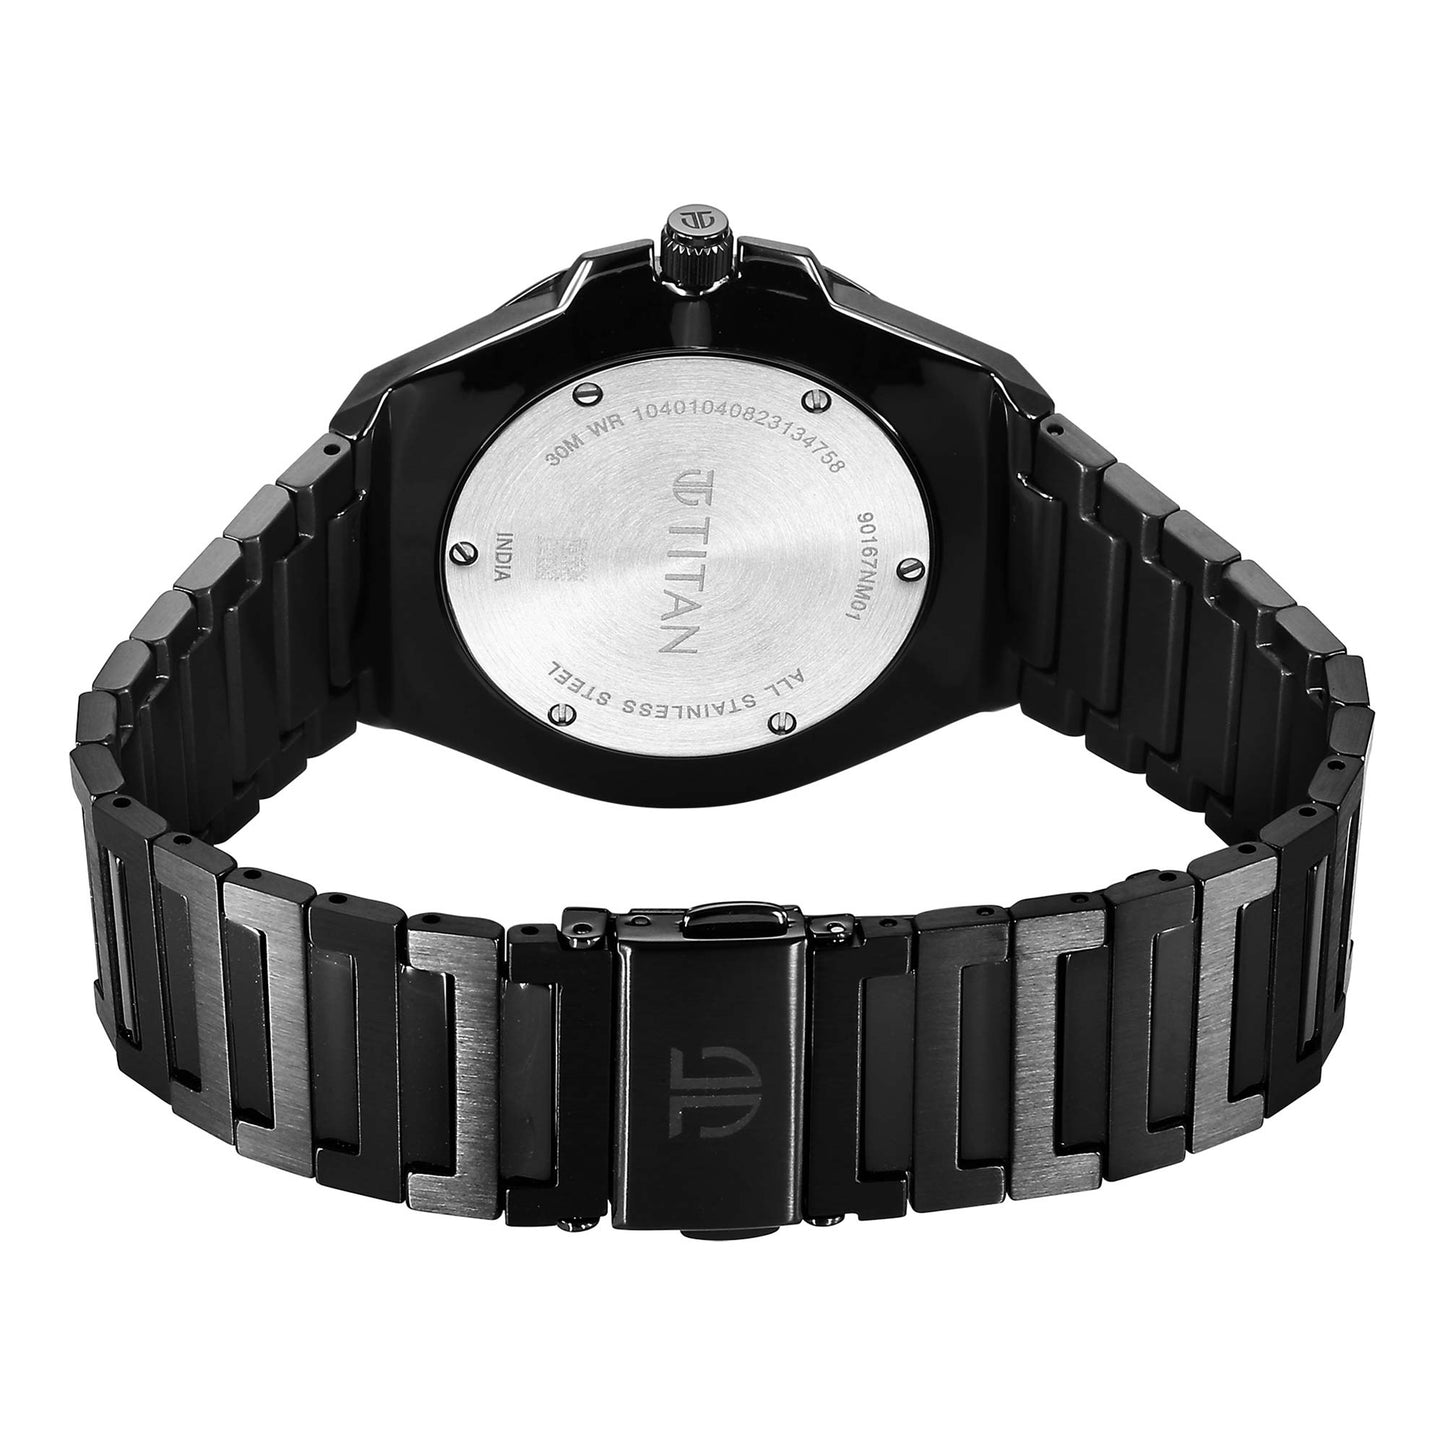 Titan Classique Slim Quartz Analog with Date Black Dial Stainless Steel Strap Watch for Men